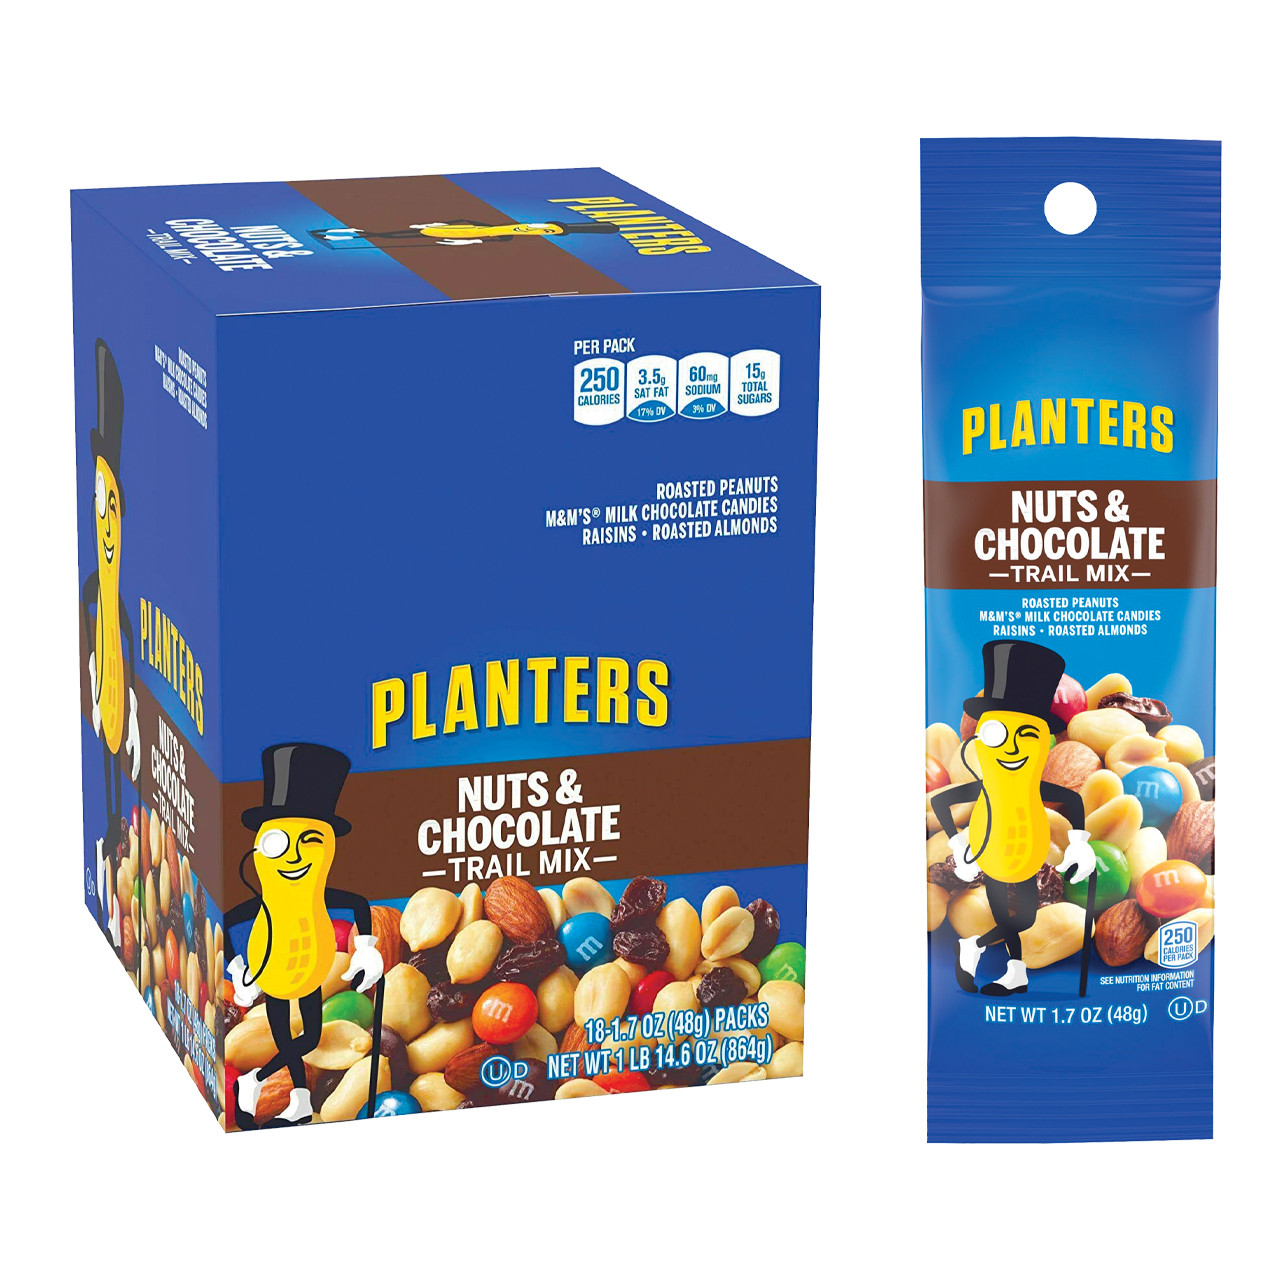 M&M's Peanut Chocolate Candies - Sharing Size - 24ct Display Box